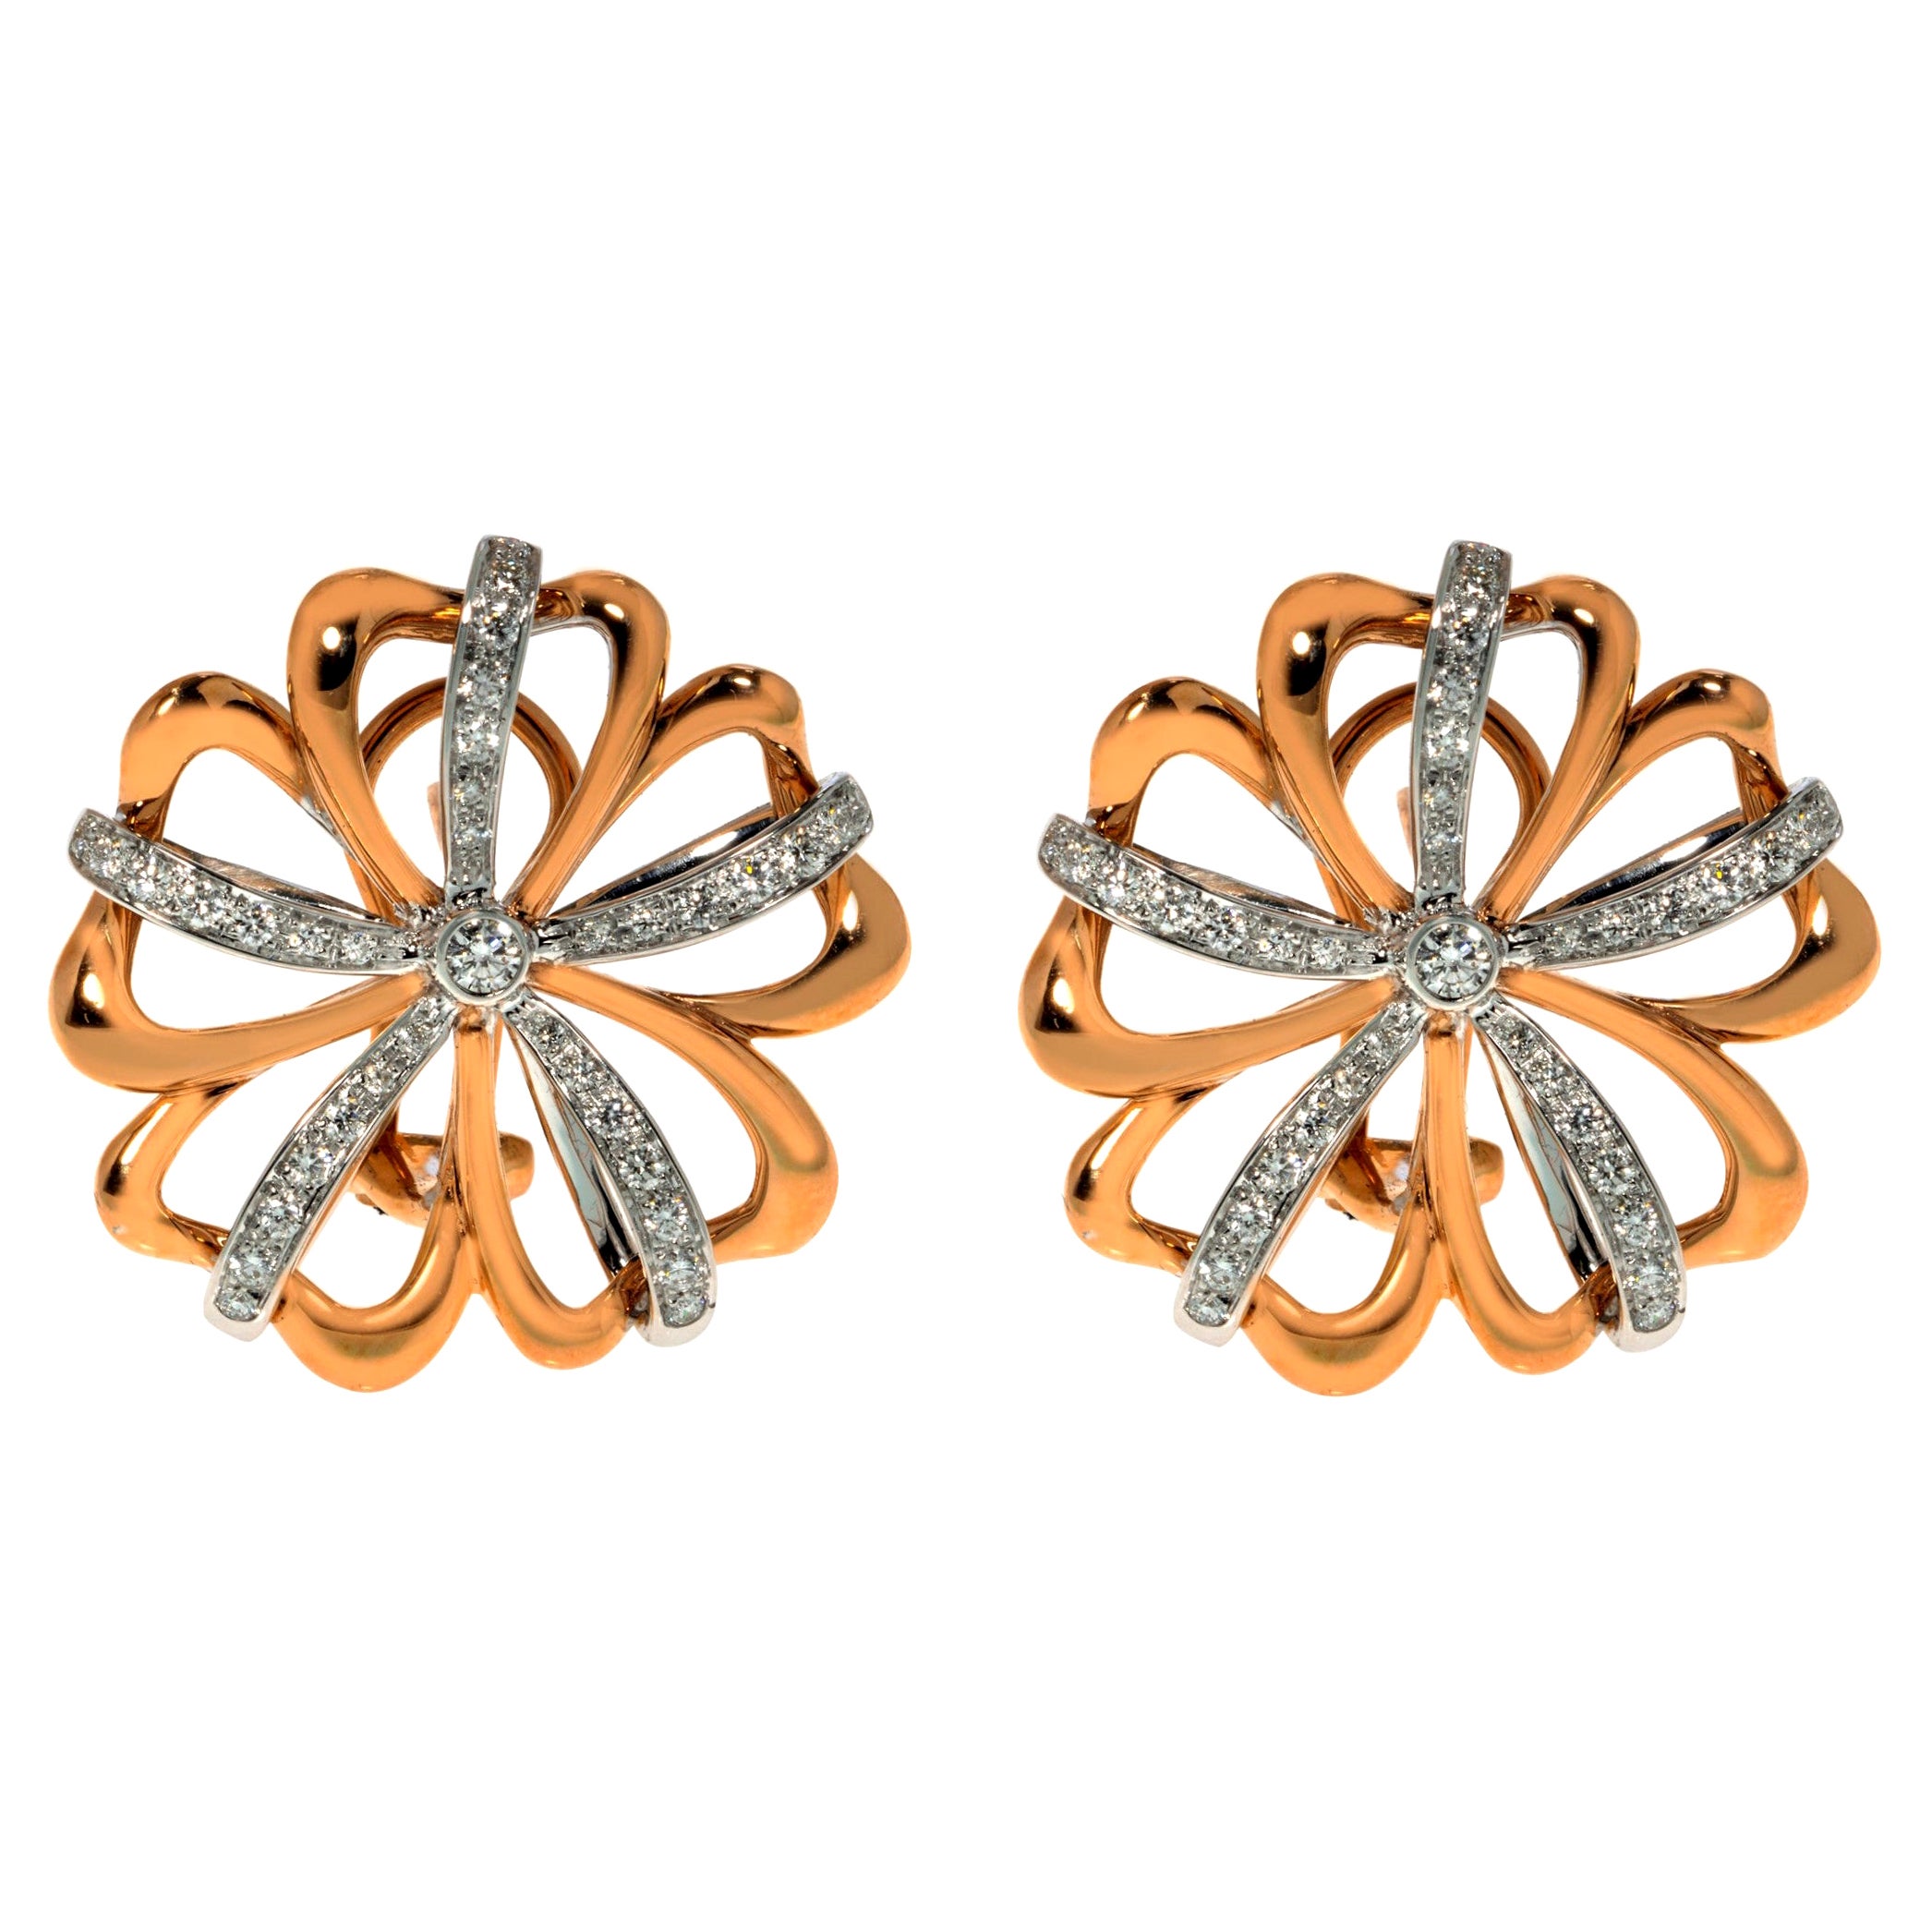 Luca Carati Two Tone Diamond Flower Earrings 18K Rose & White Gold 0.78Cttw For Sale